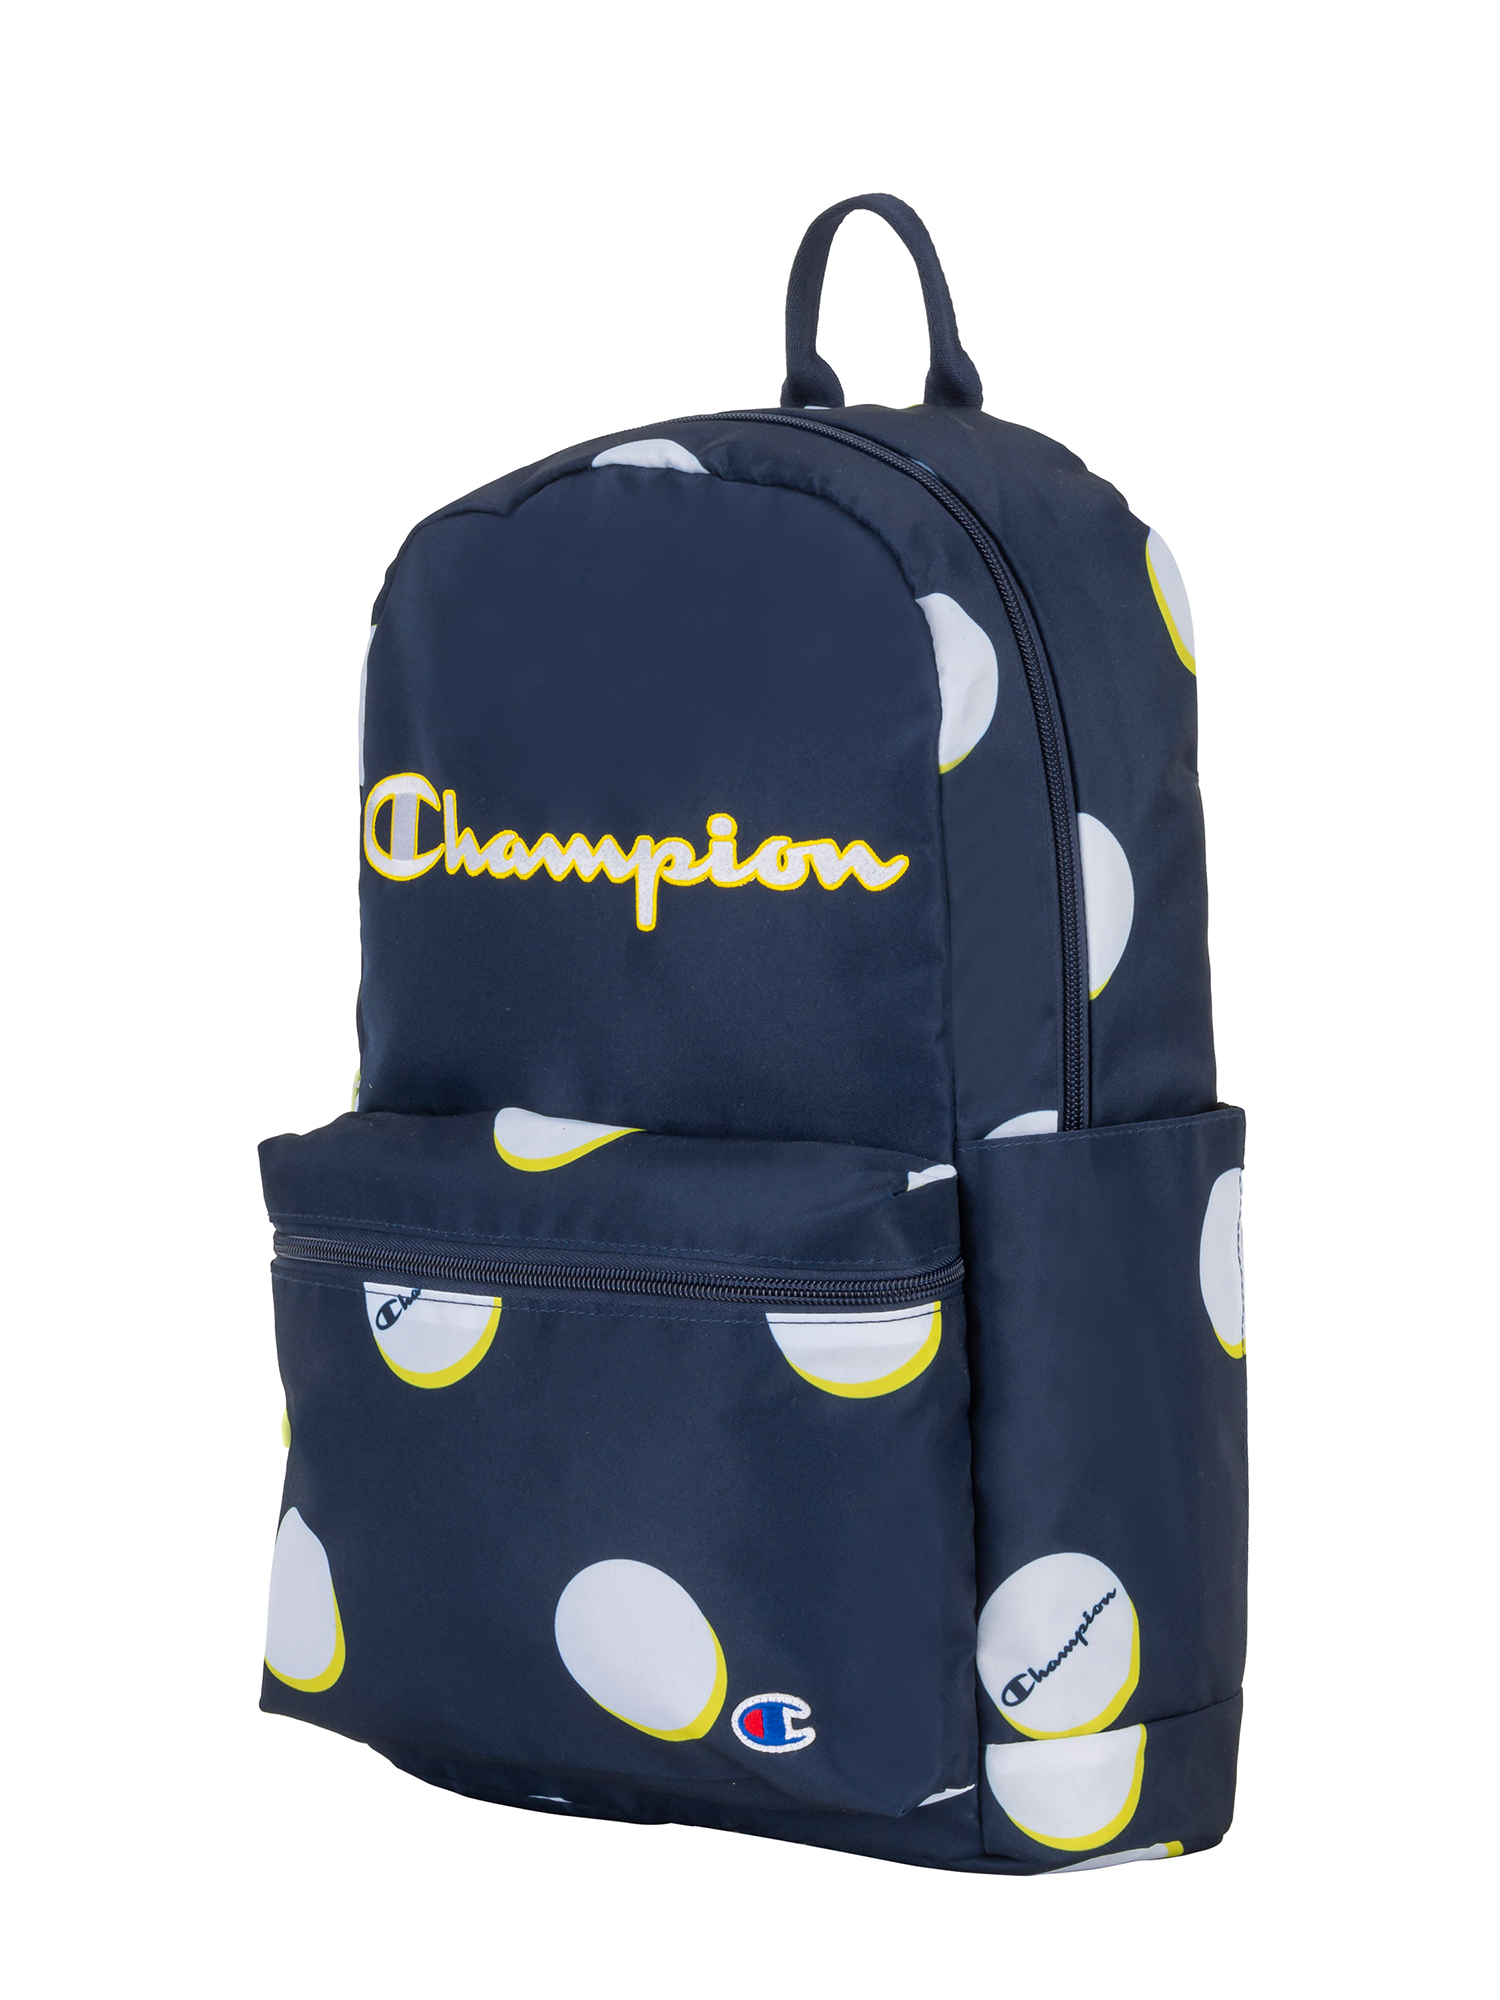 Champion Billboard Backpack, Navy - image 2 of 5